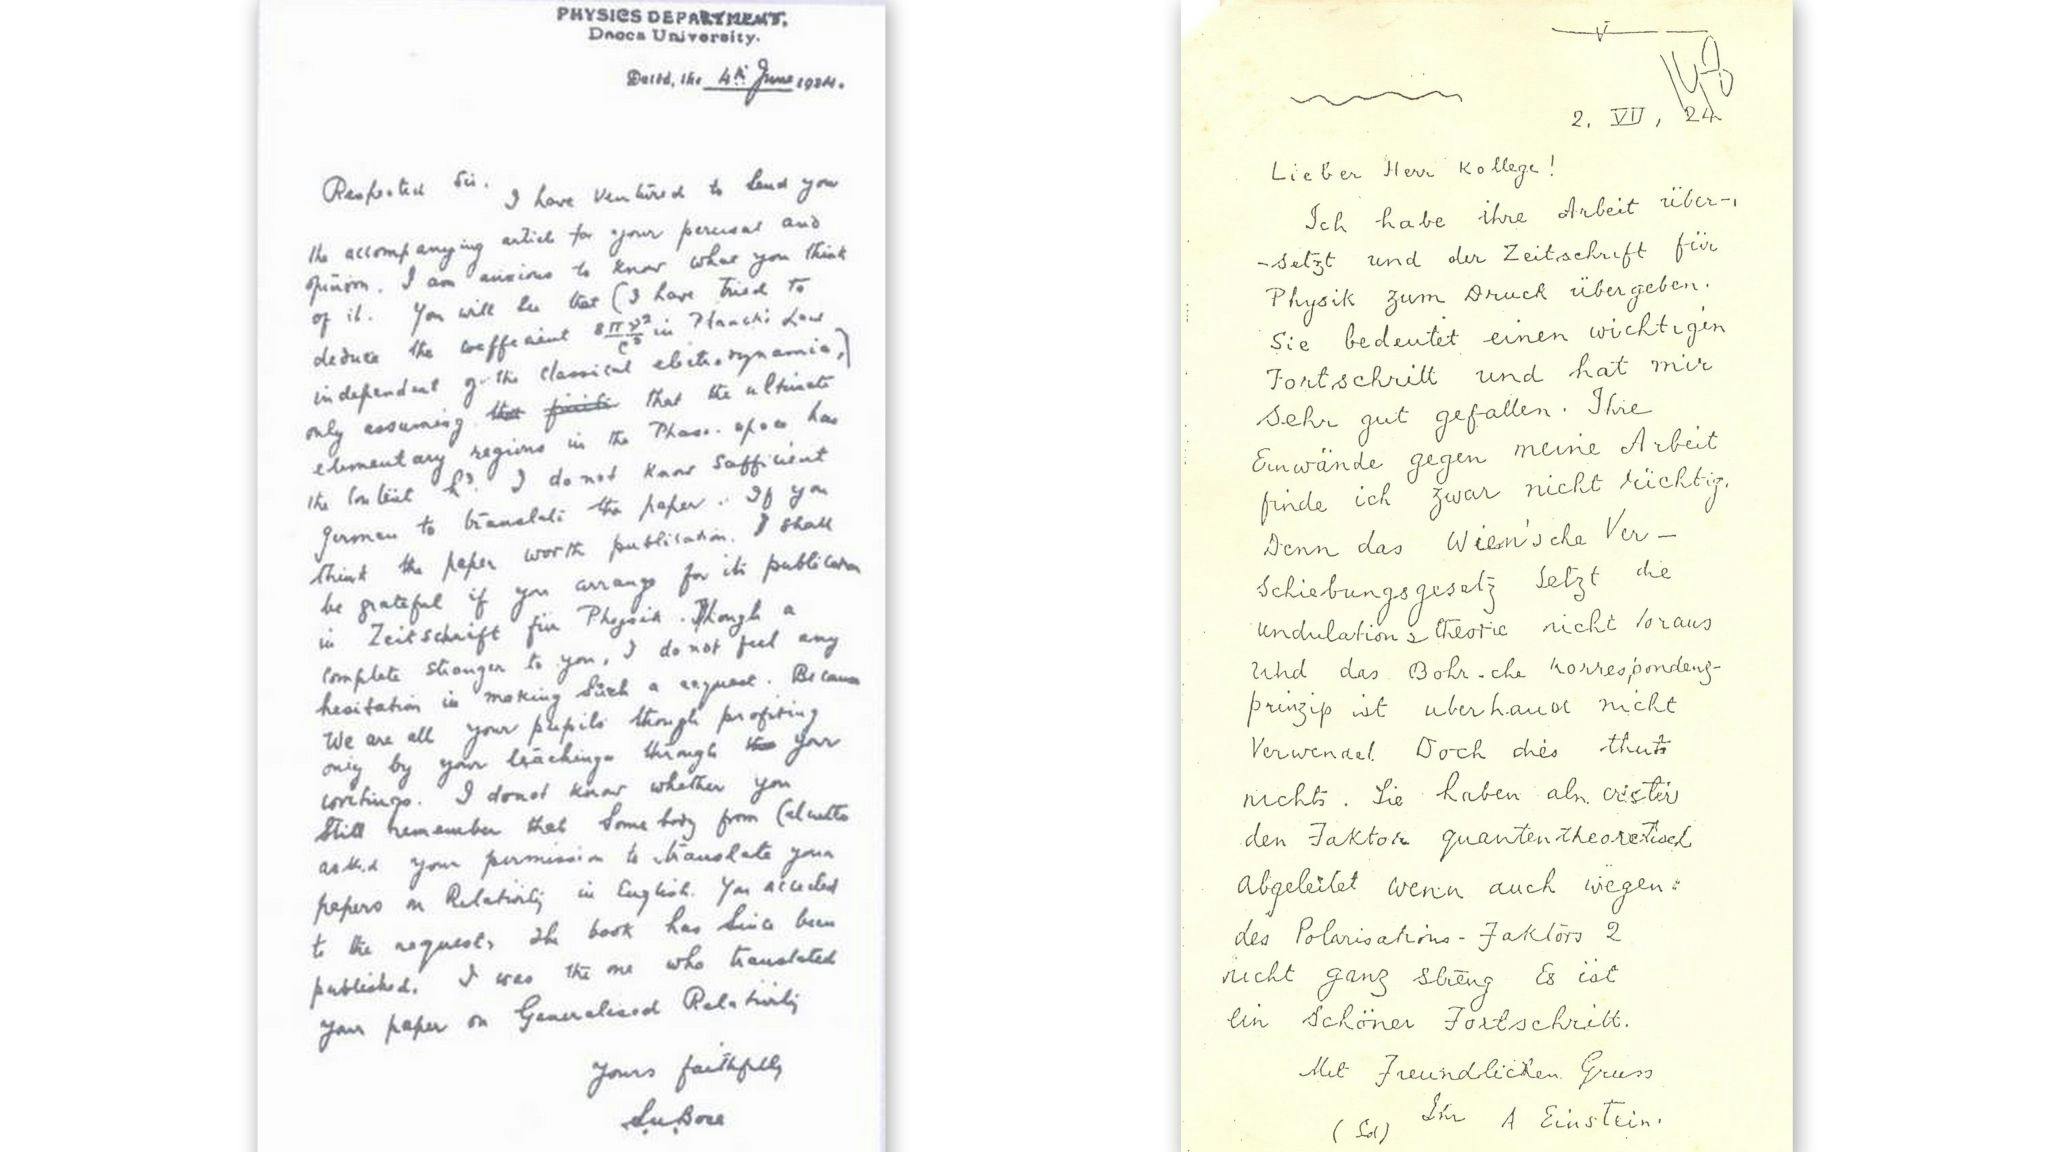 Letter exchanged between Bose and Einstein